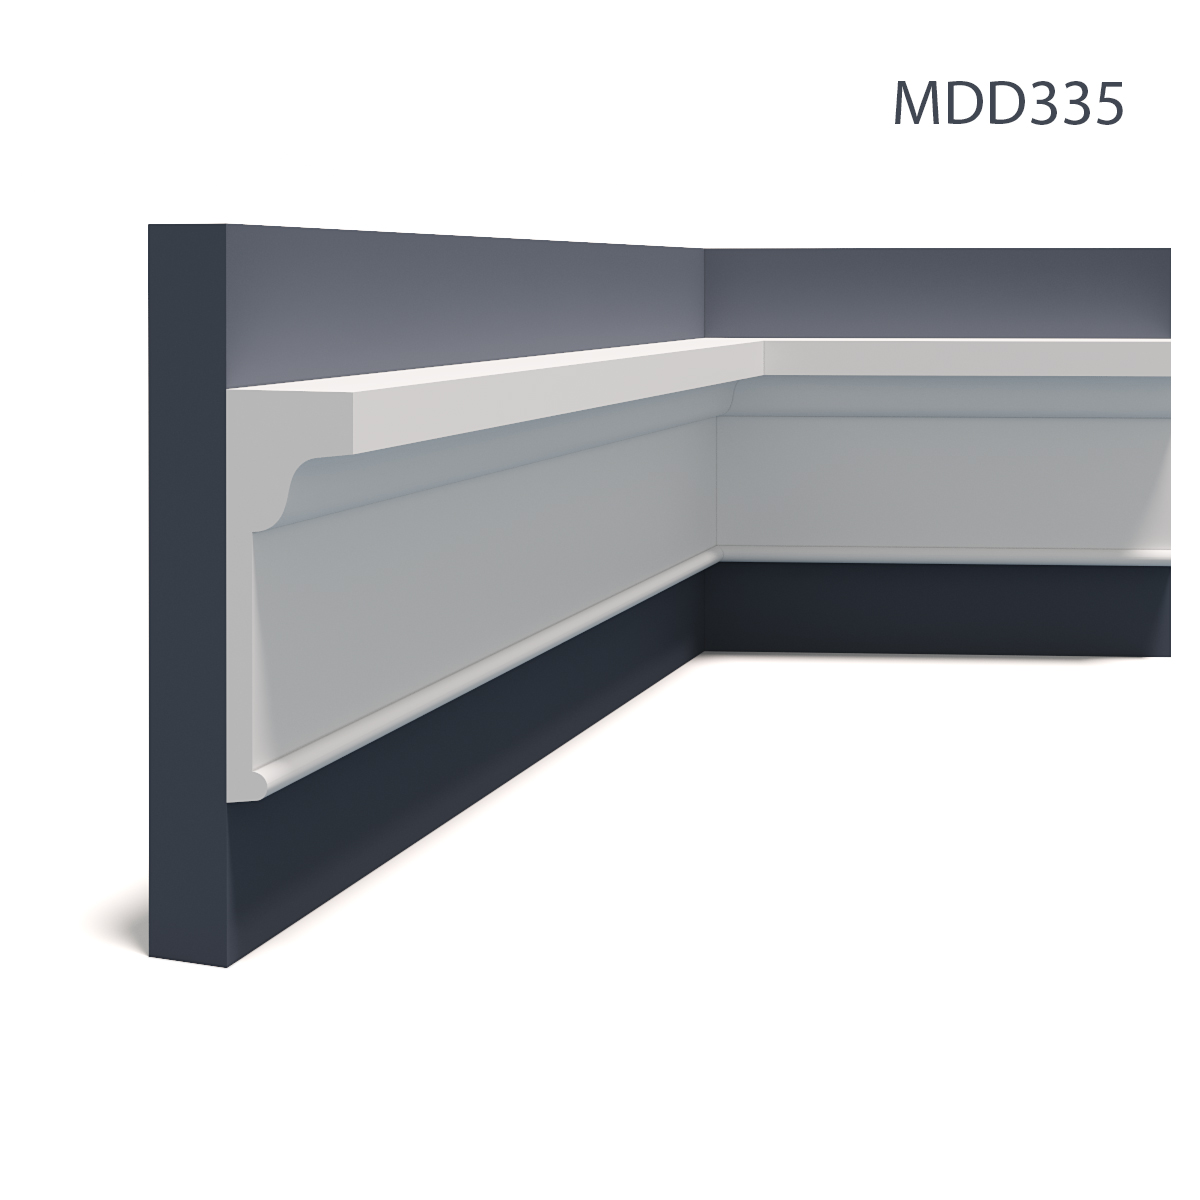 Brau decorativ MDD335, 240 X 15.5 X 5.4 cm, Mardom Decor